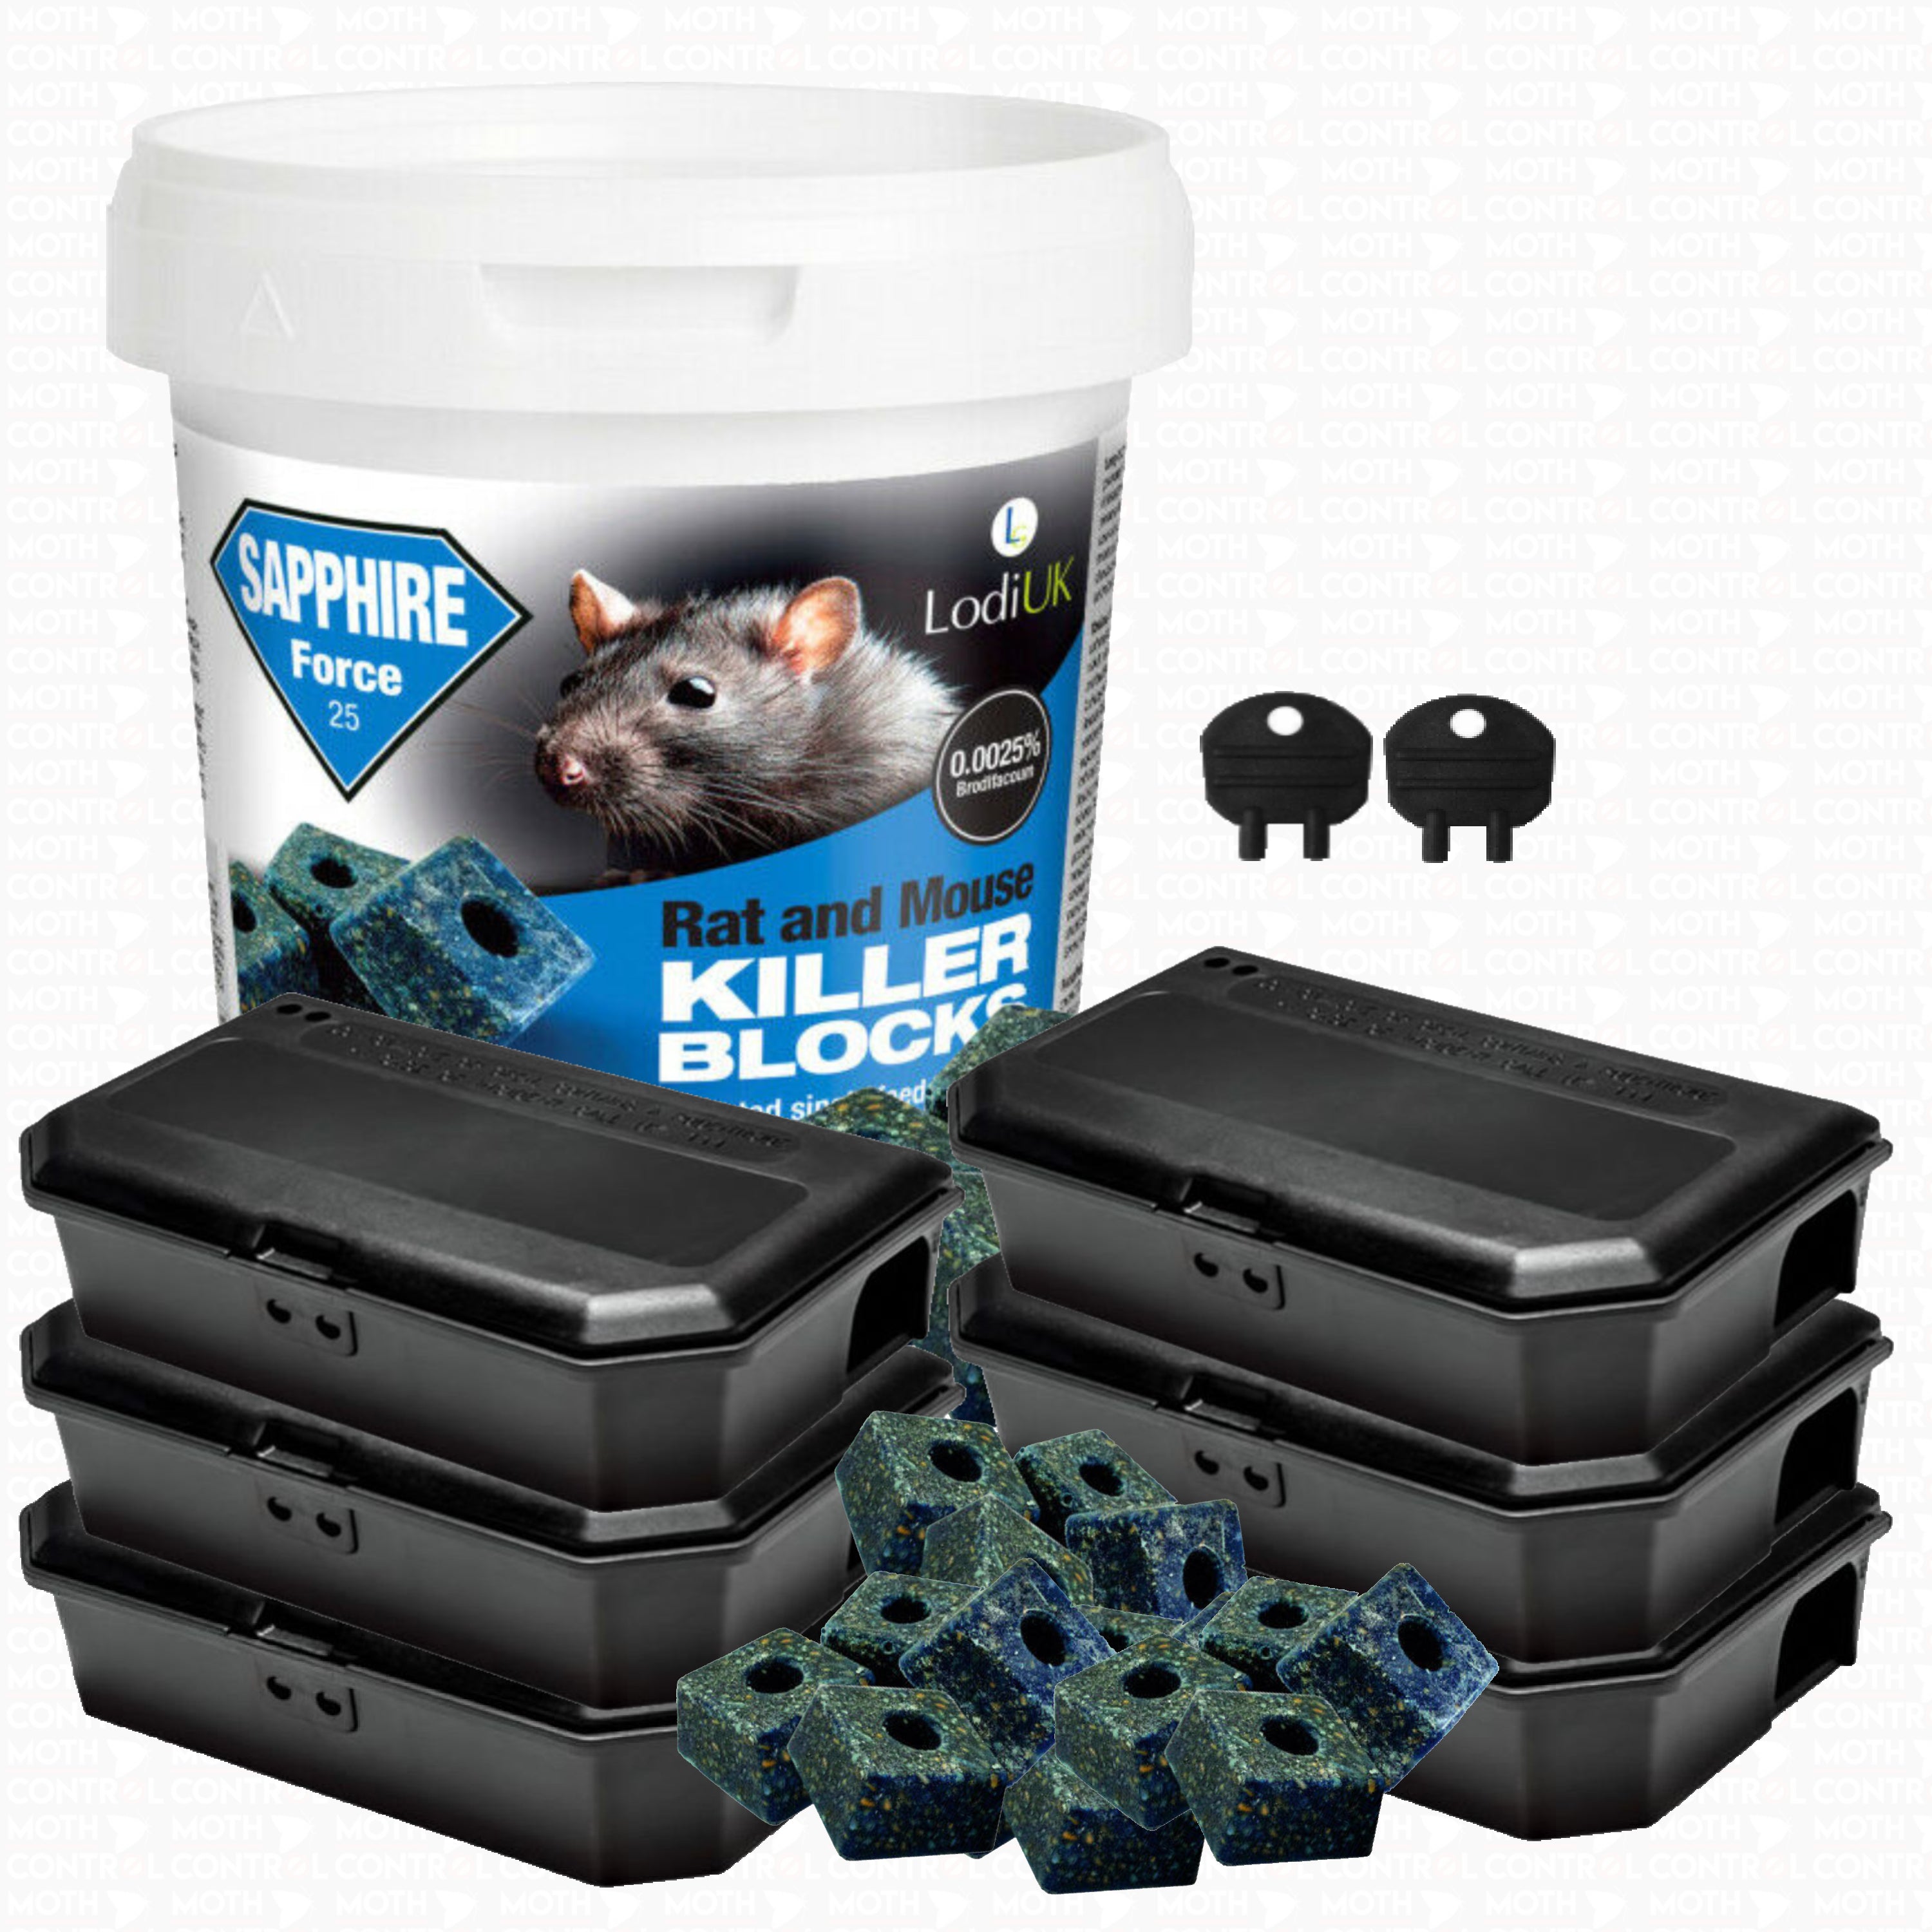 Pre-Baited Poison Mouse Bait Box Kit - Advanced Single Feed Mice